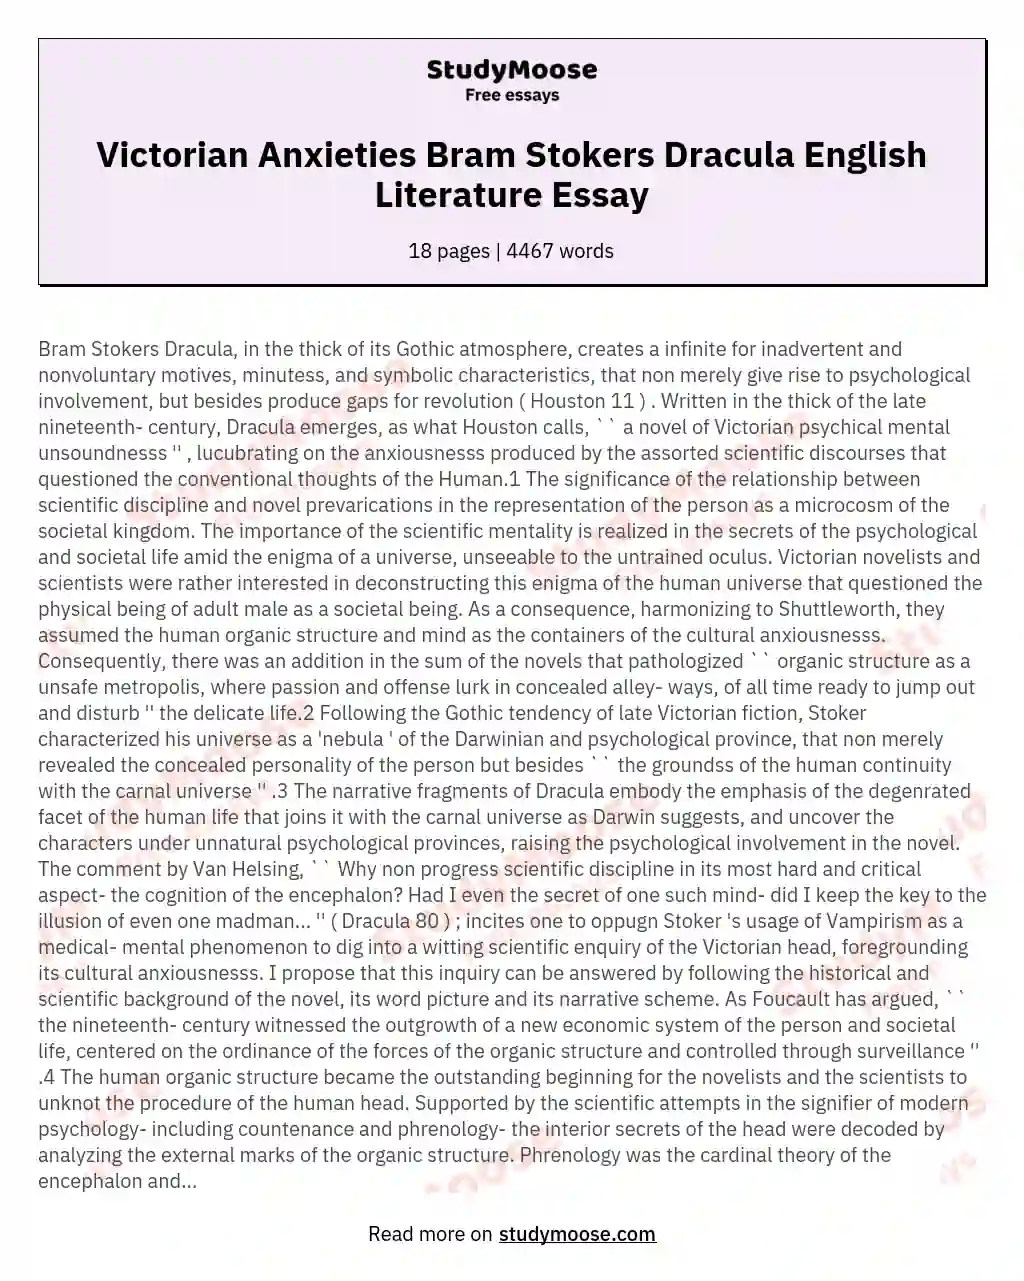 Victorian Anxieties Bram Stokers Dracula English Literature Essay